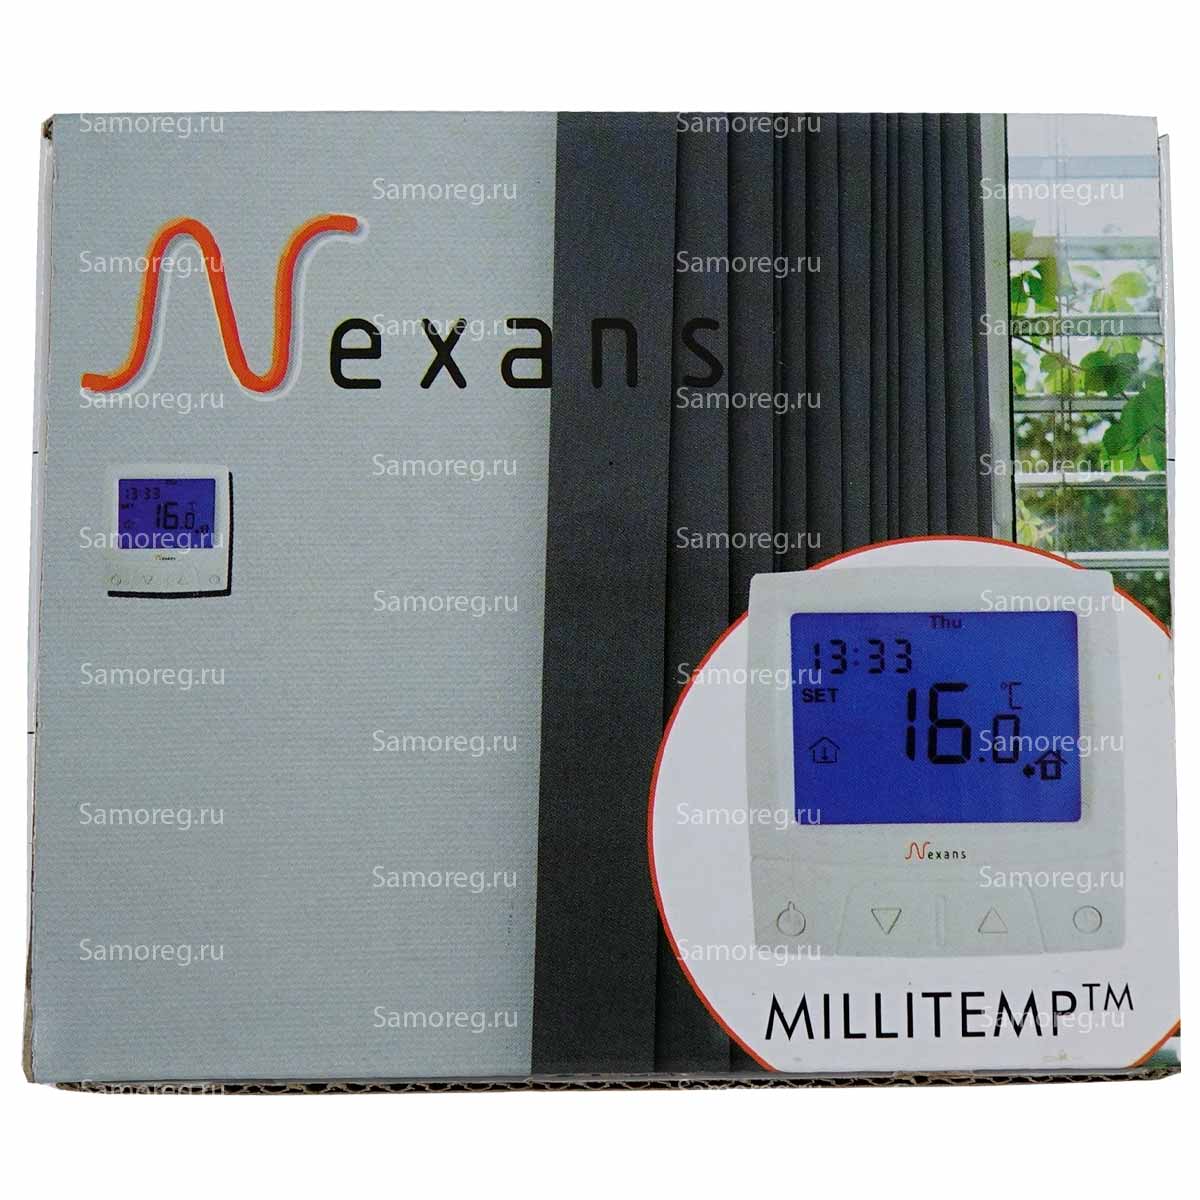 Терморегулятор NEXANS MILLITEMP CDFR-003 белый